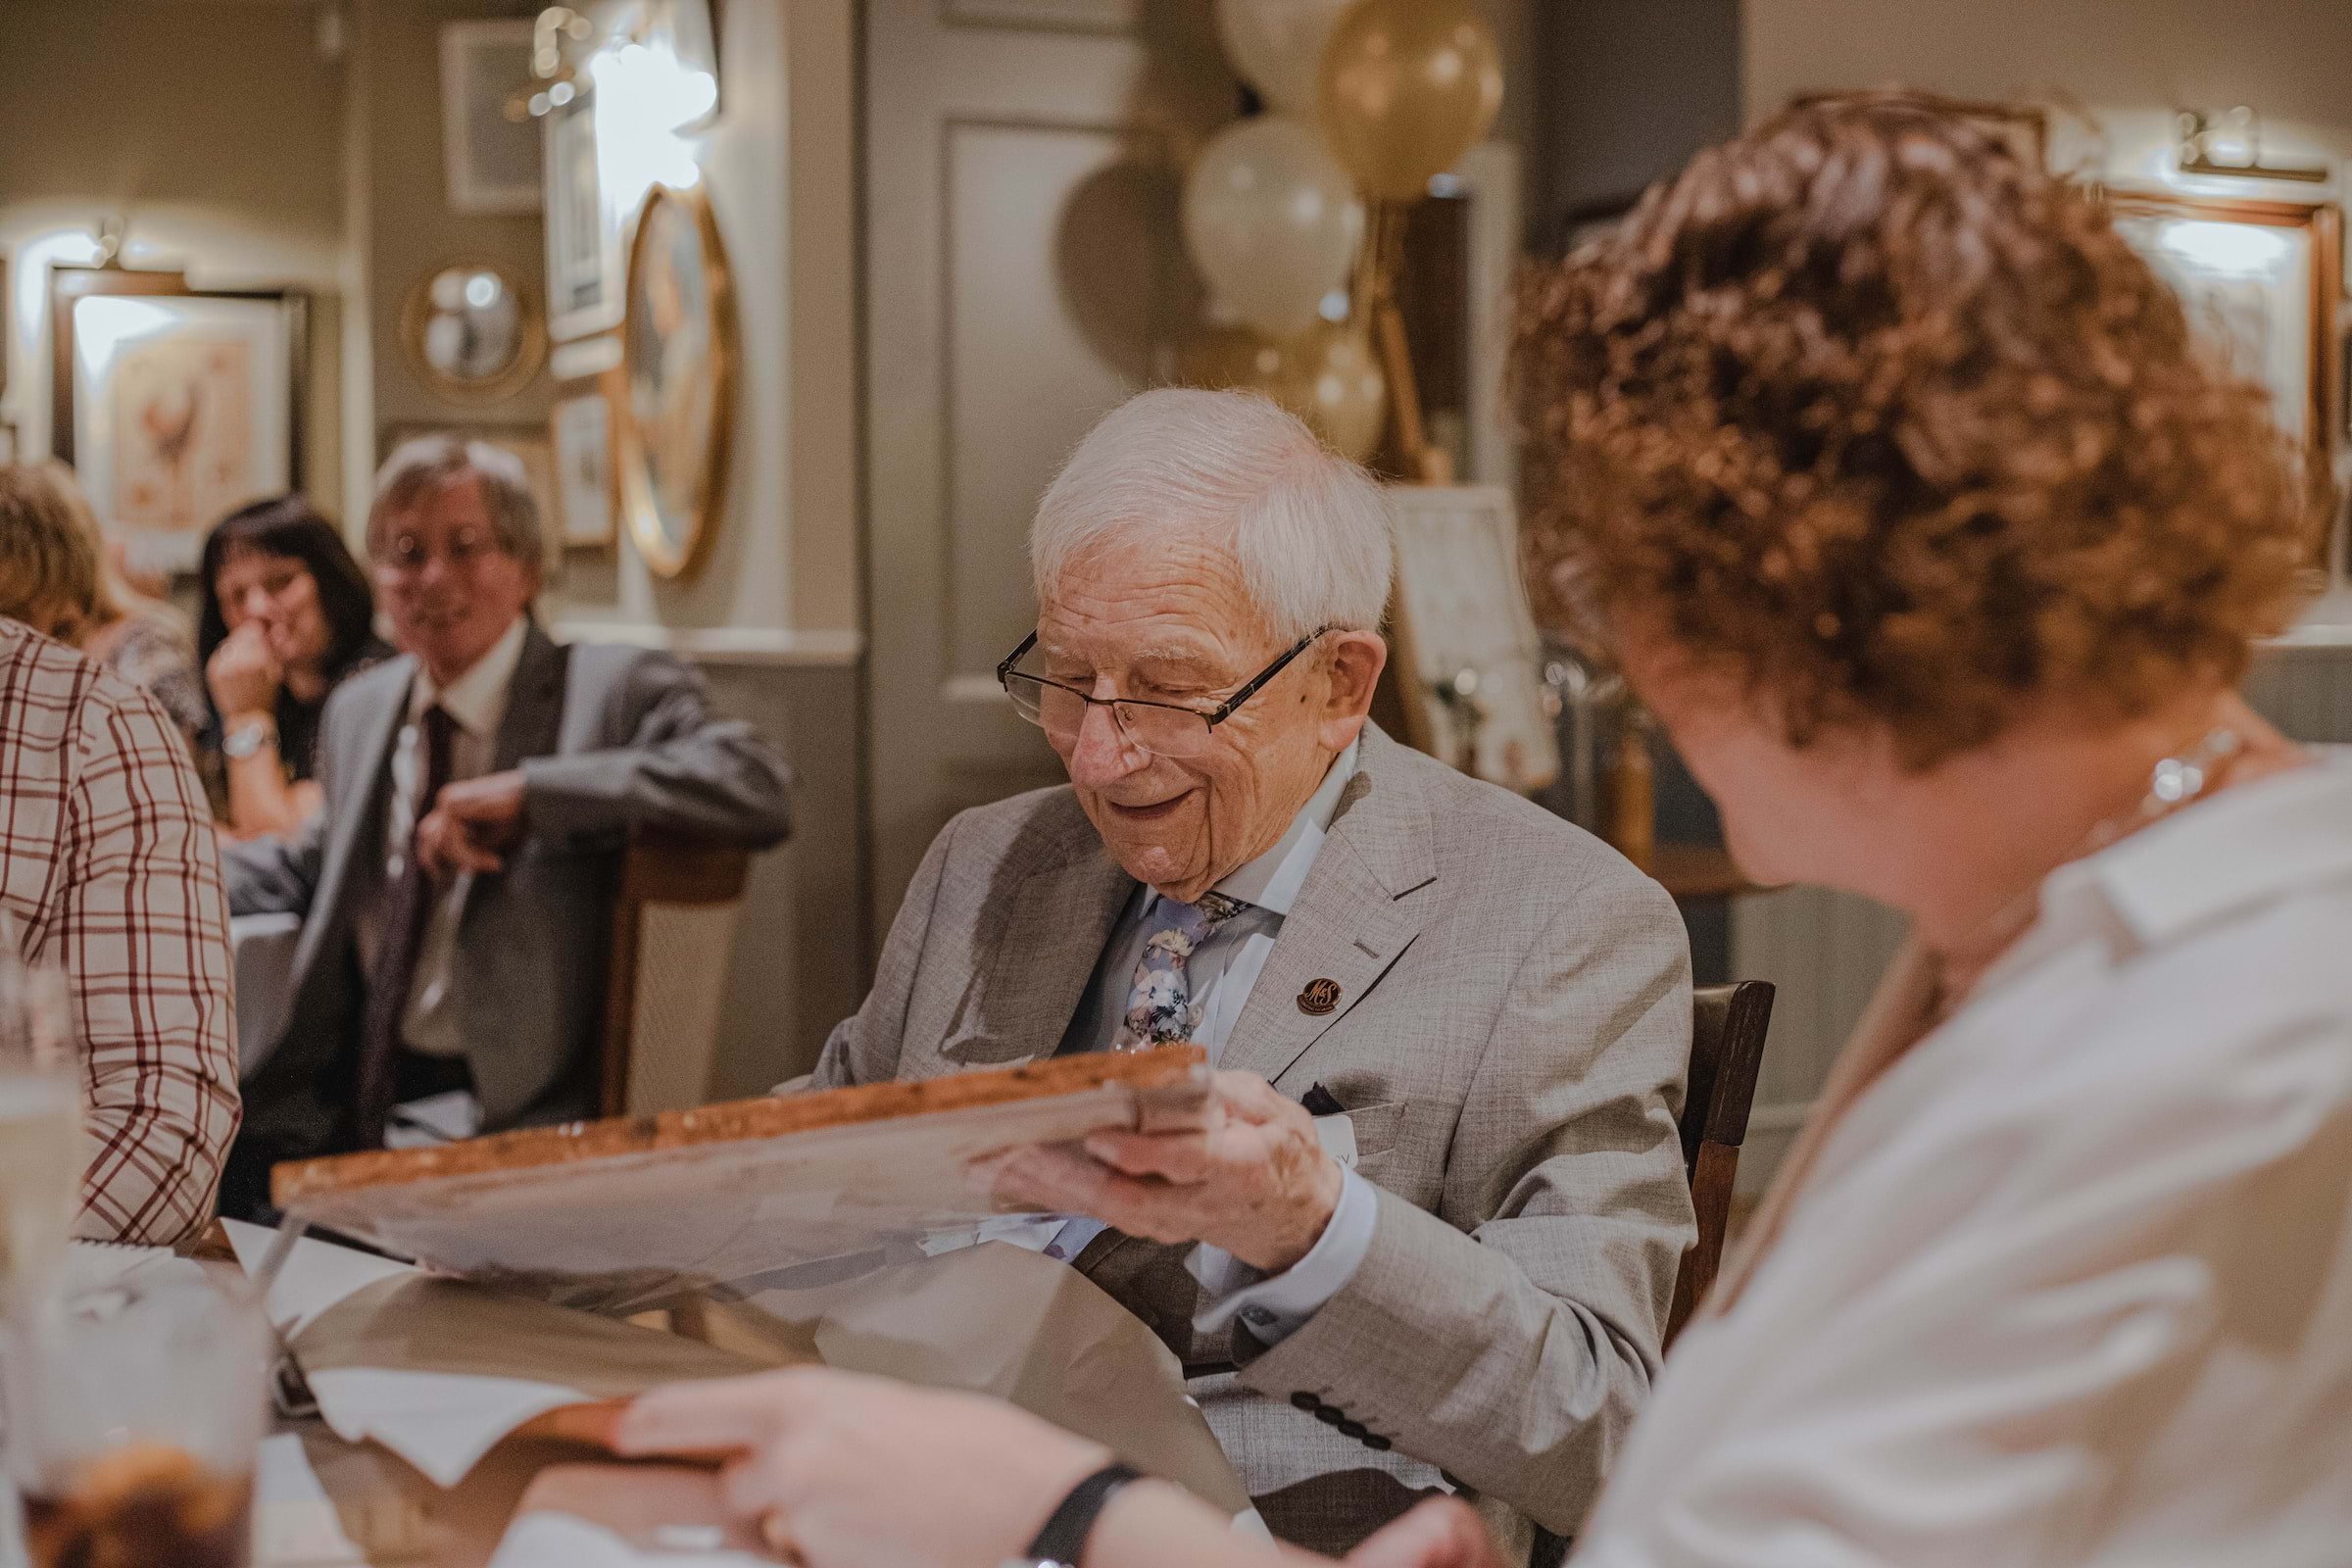 Elderly man opening a gift in a restaurant